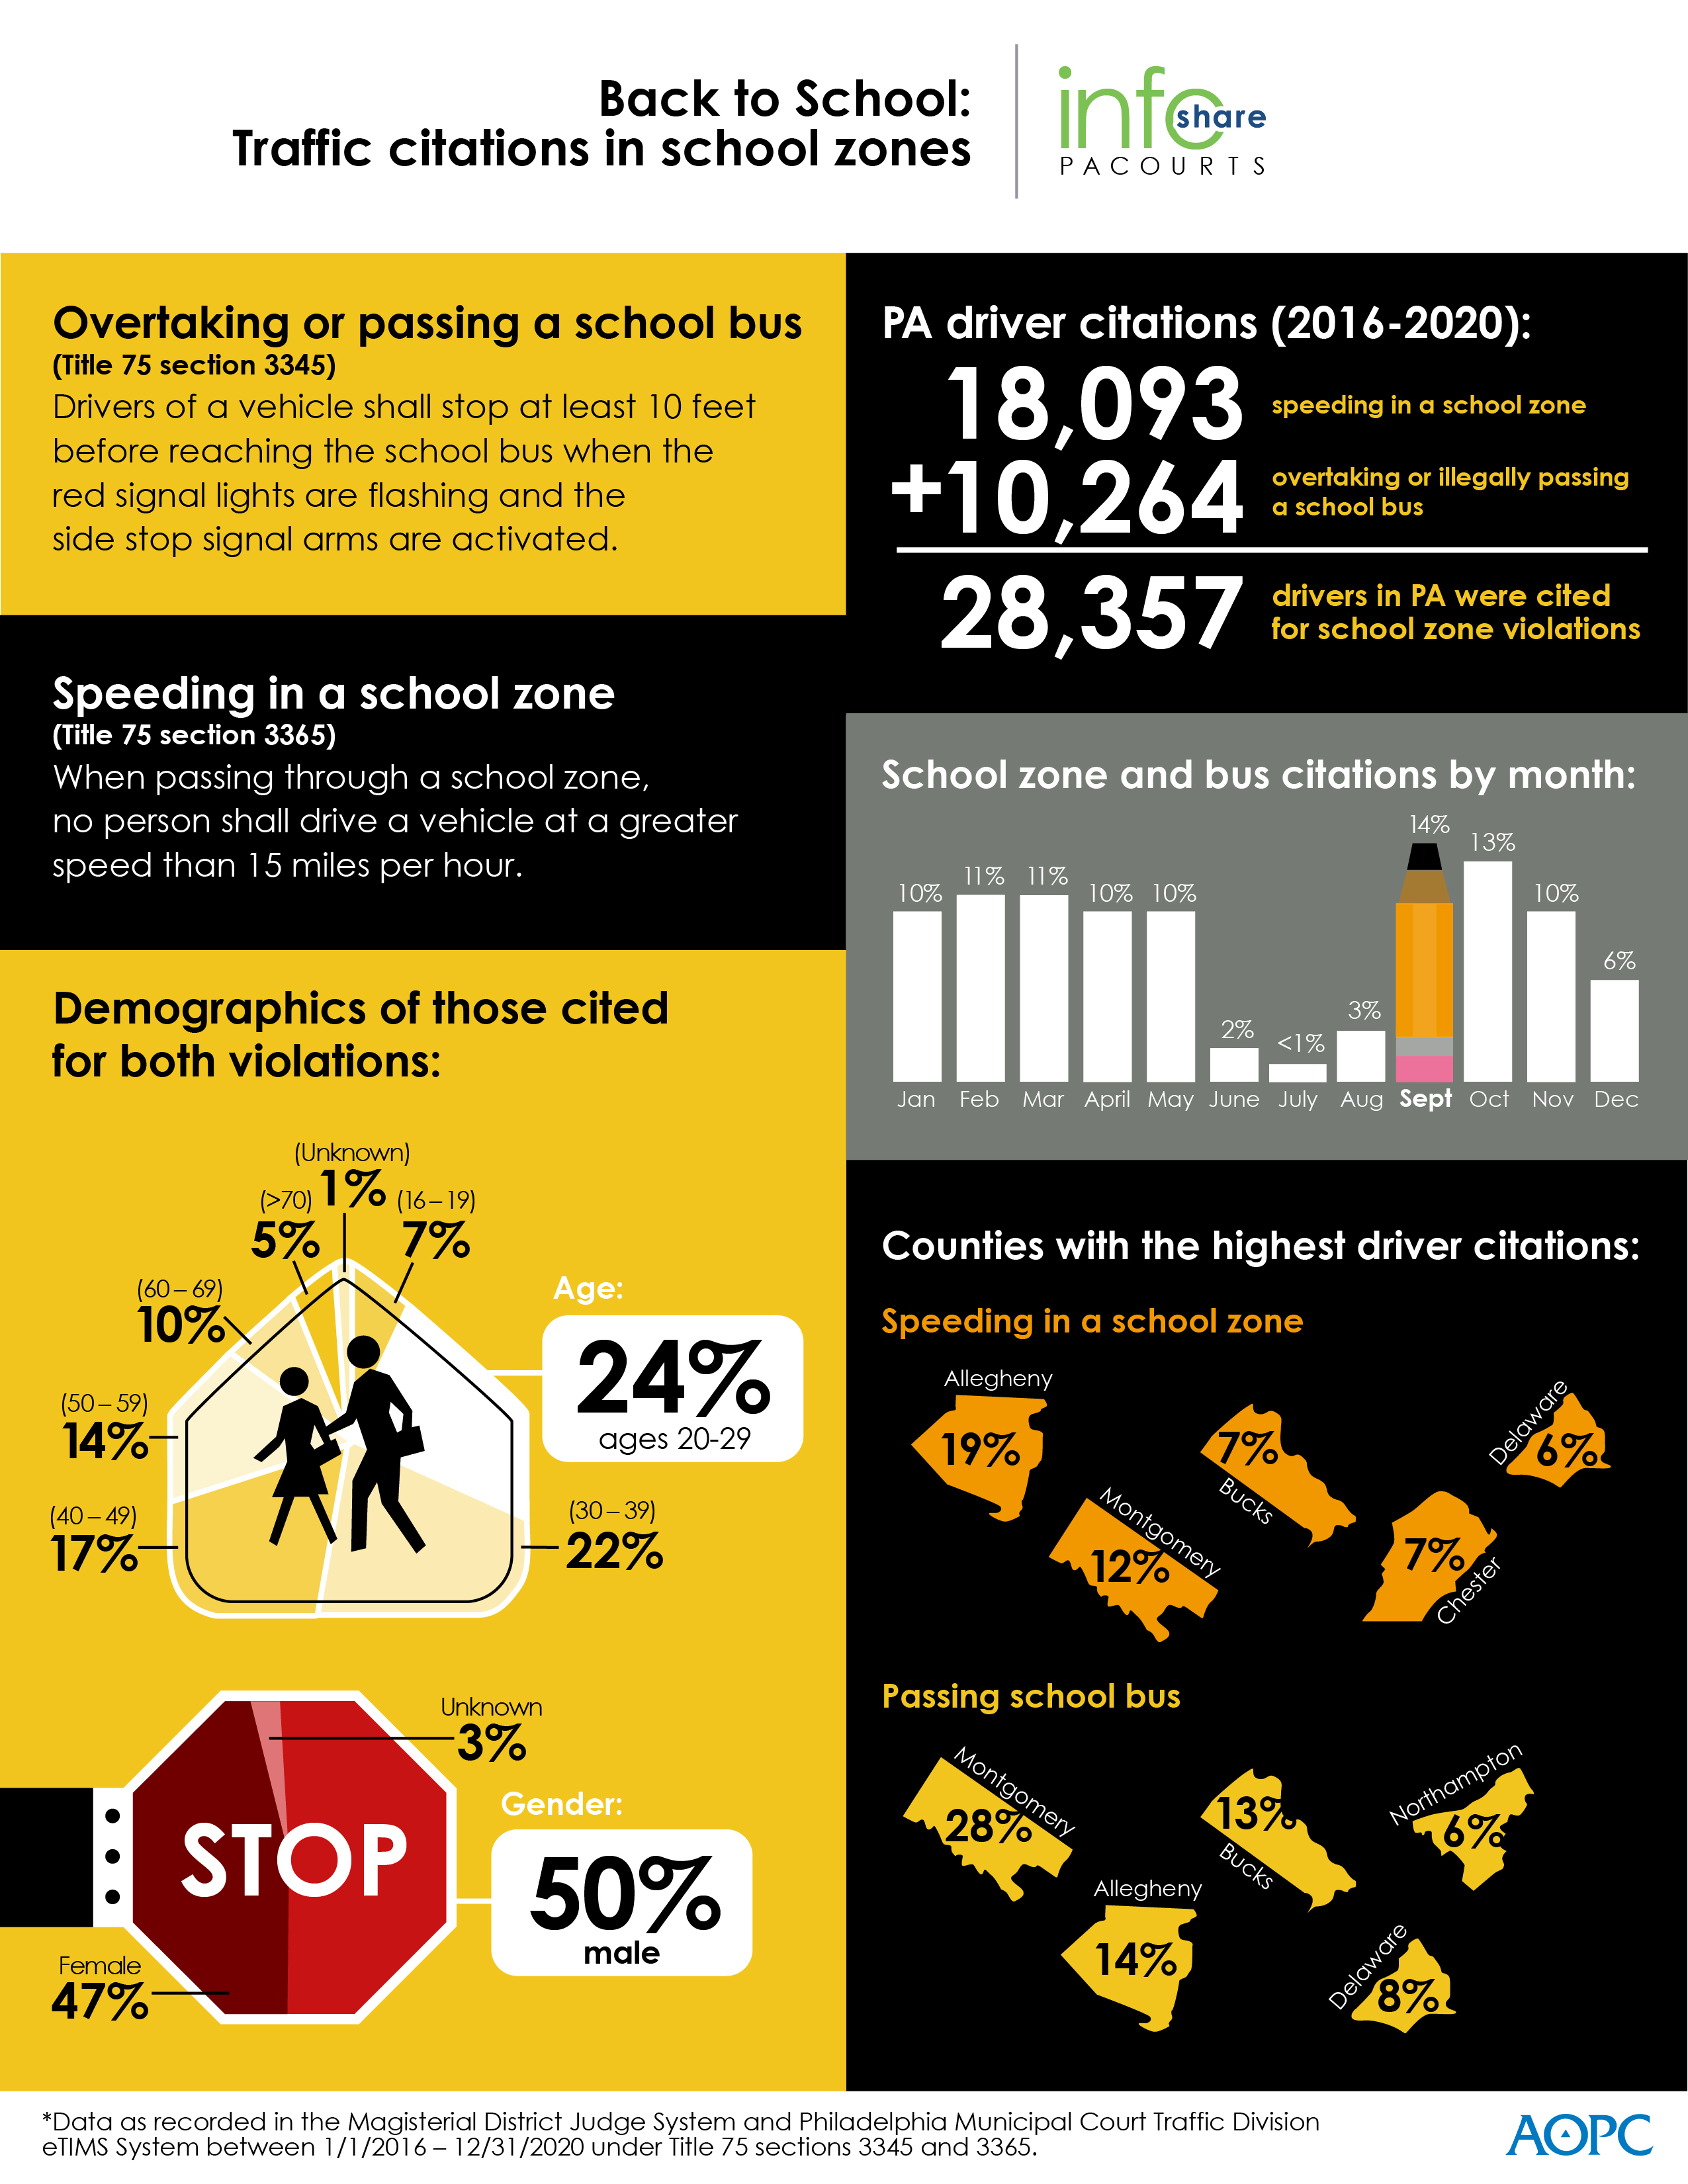 Traffic citations in school zones drop during 2020